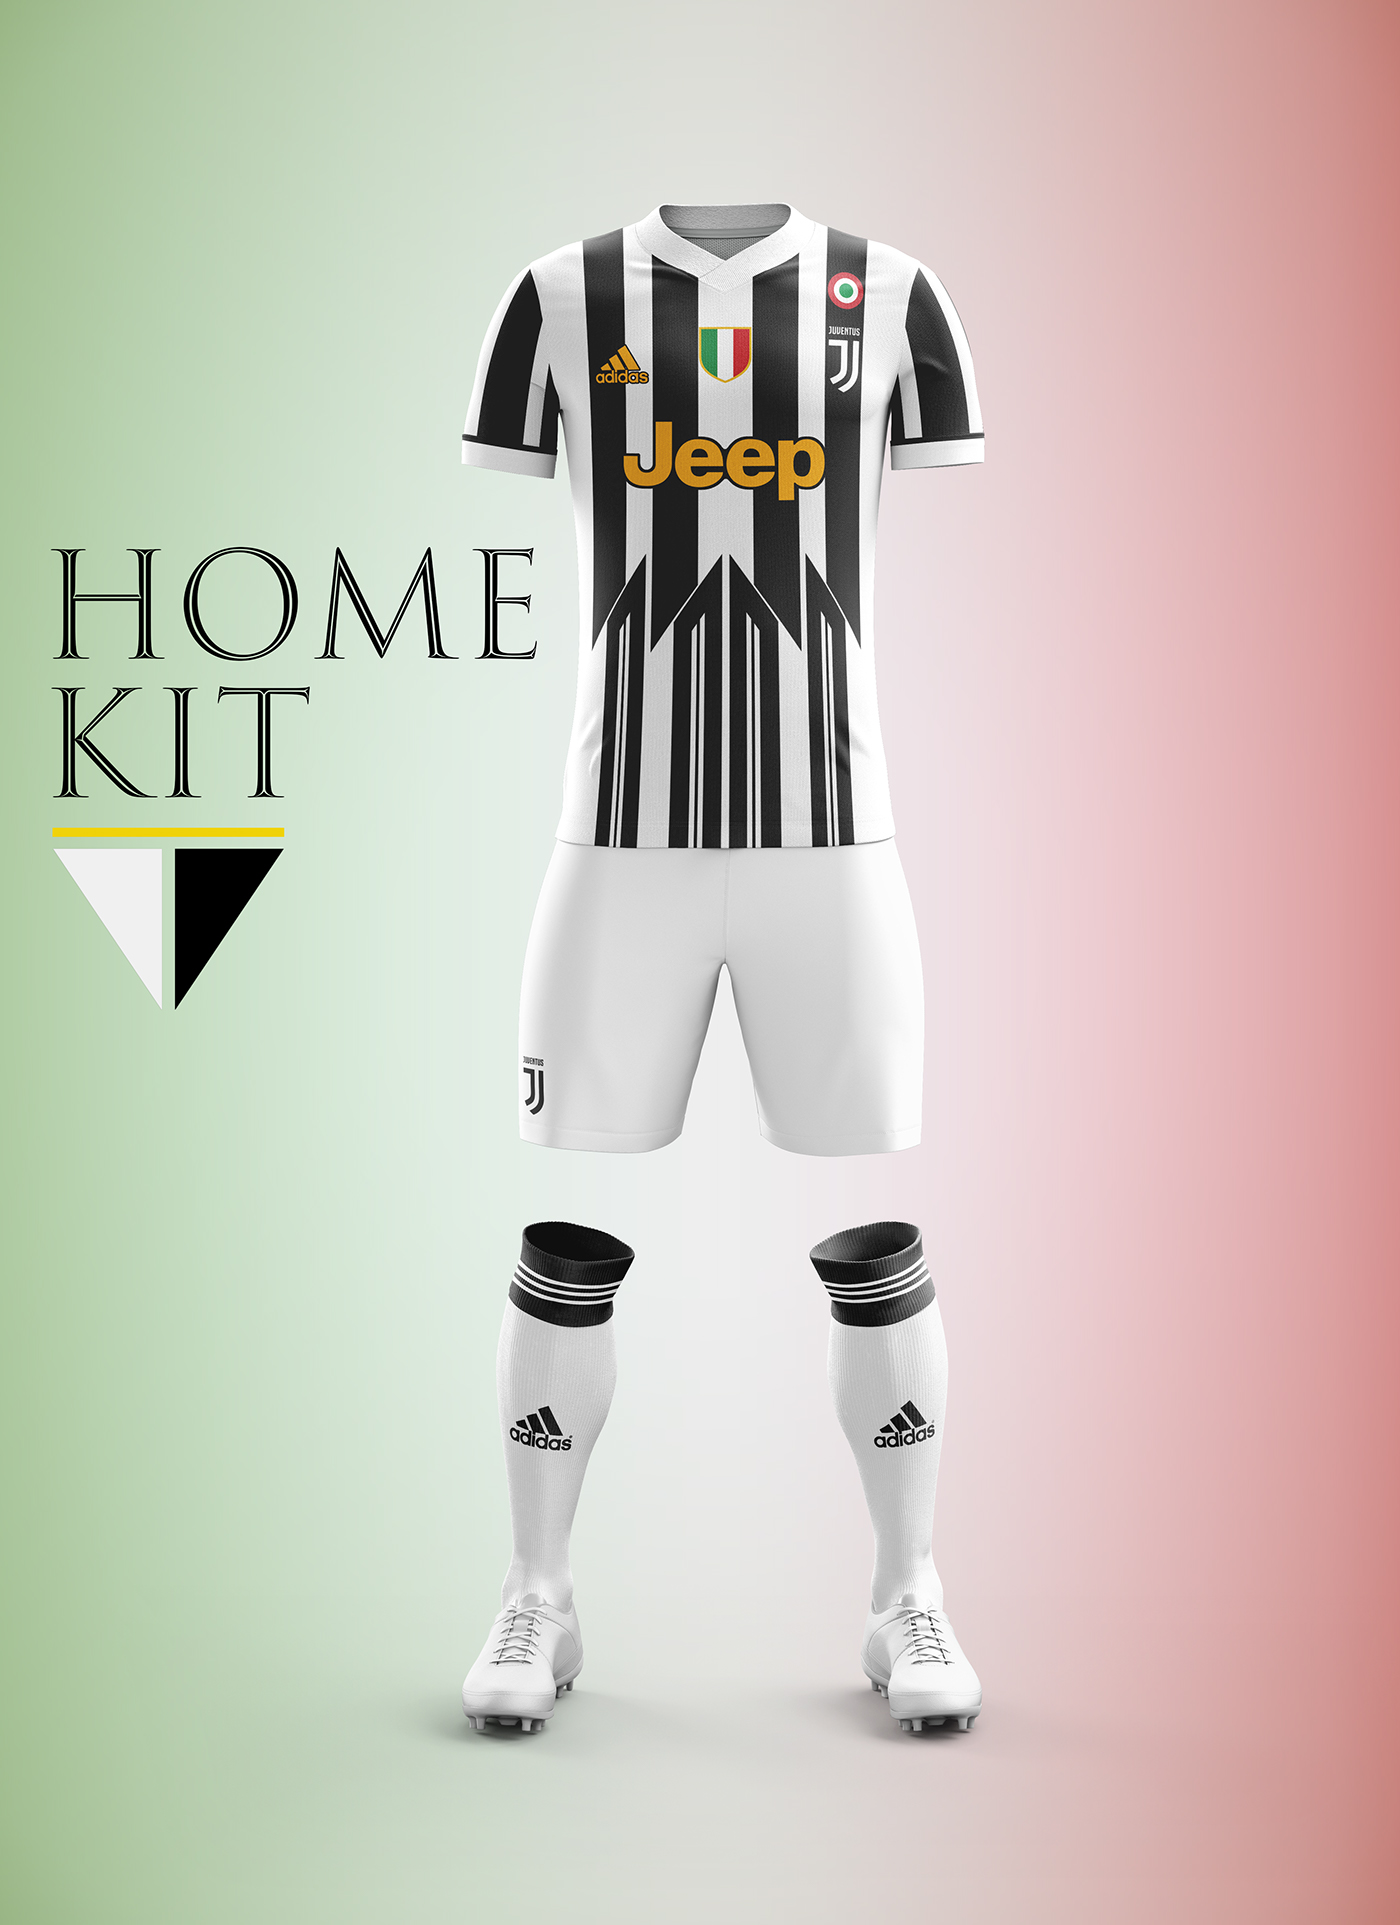 Juventus football club Football kit kit concept design Serie A Italy soccer